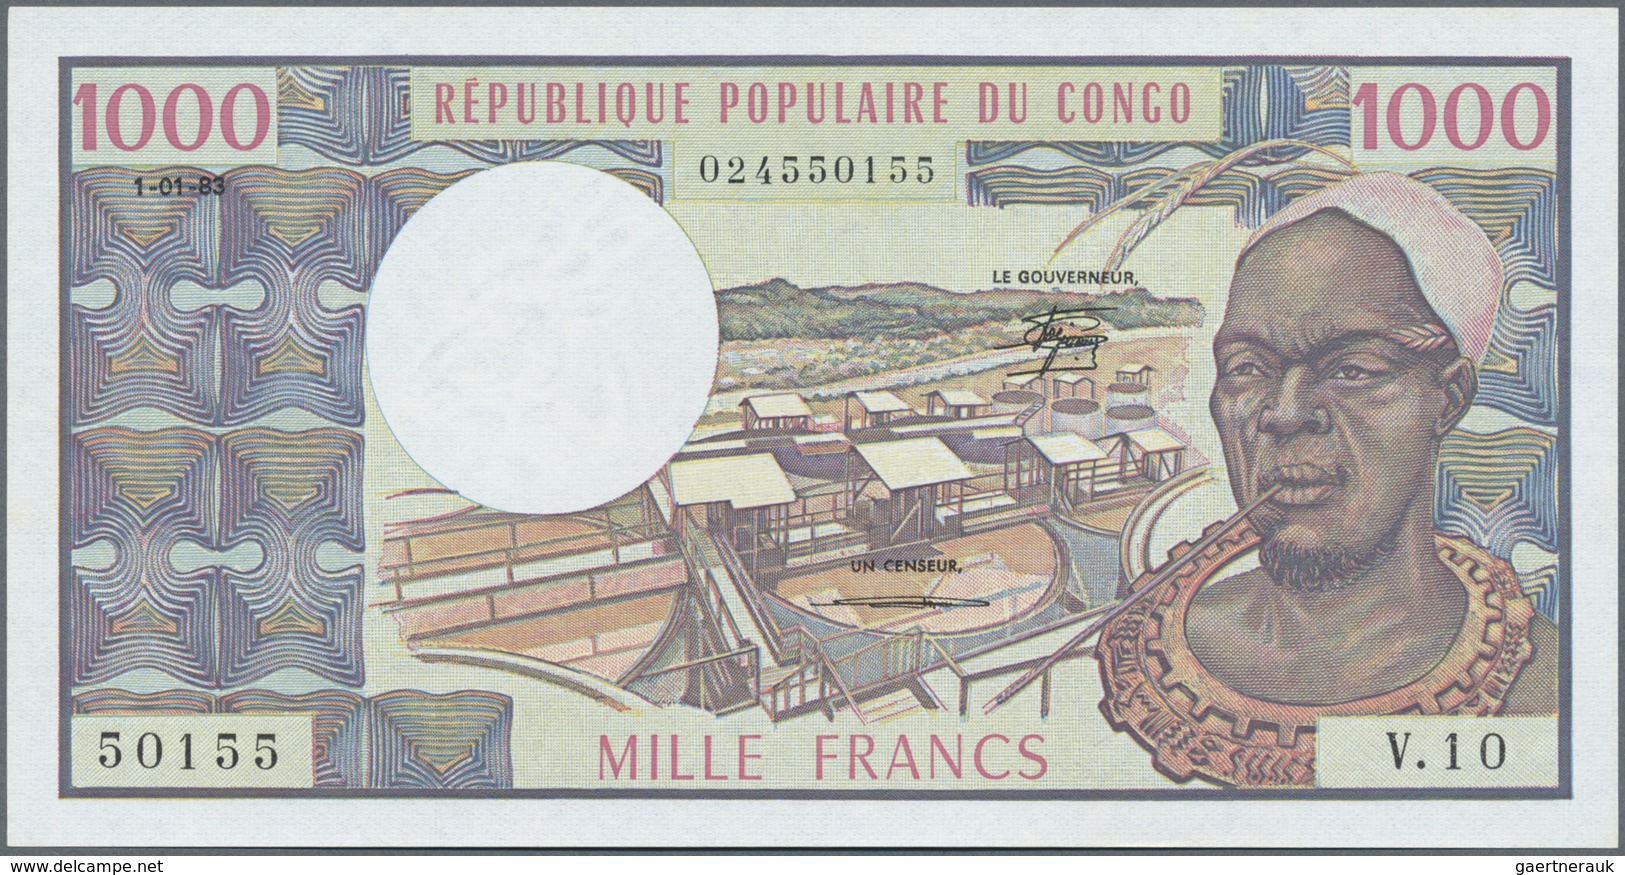 Congo / Kongo: 1000 Francs 1983 P. 3e In Condition: AUNC. - Unclassified